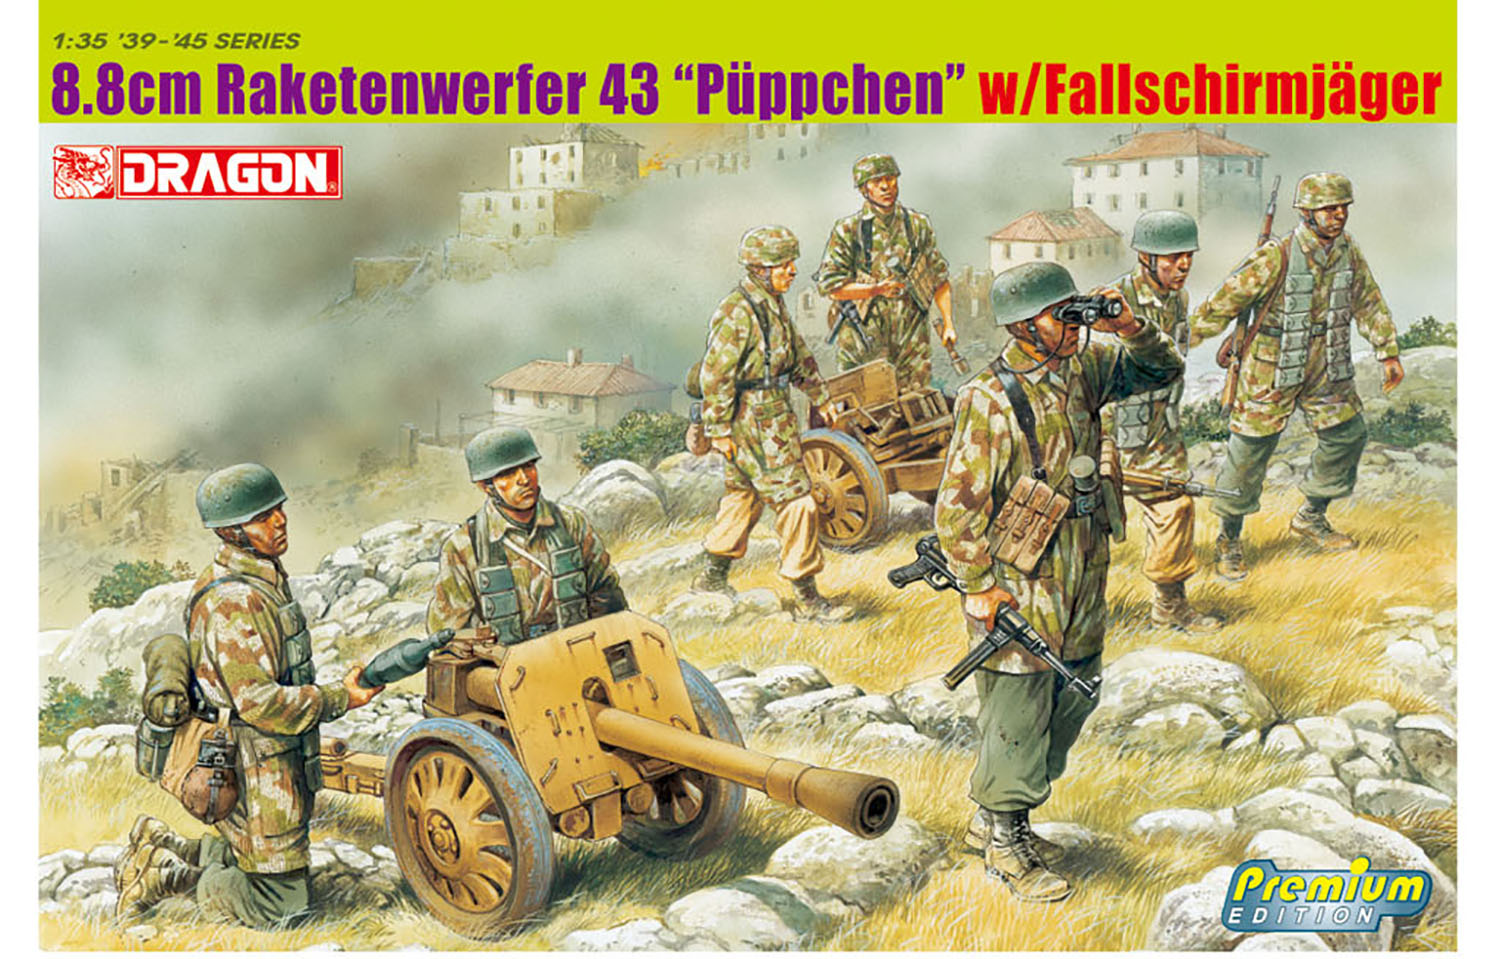 1/35 WW.II ドイツ軍 8.8cmロケット砲プップヒェン 2キット セット 降下猟兵フィギュア7体付属